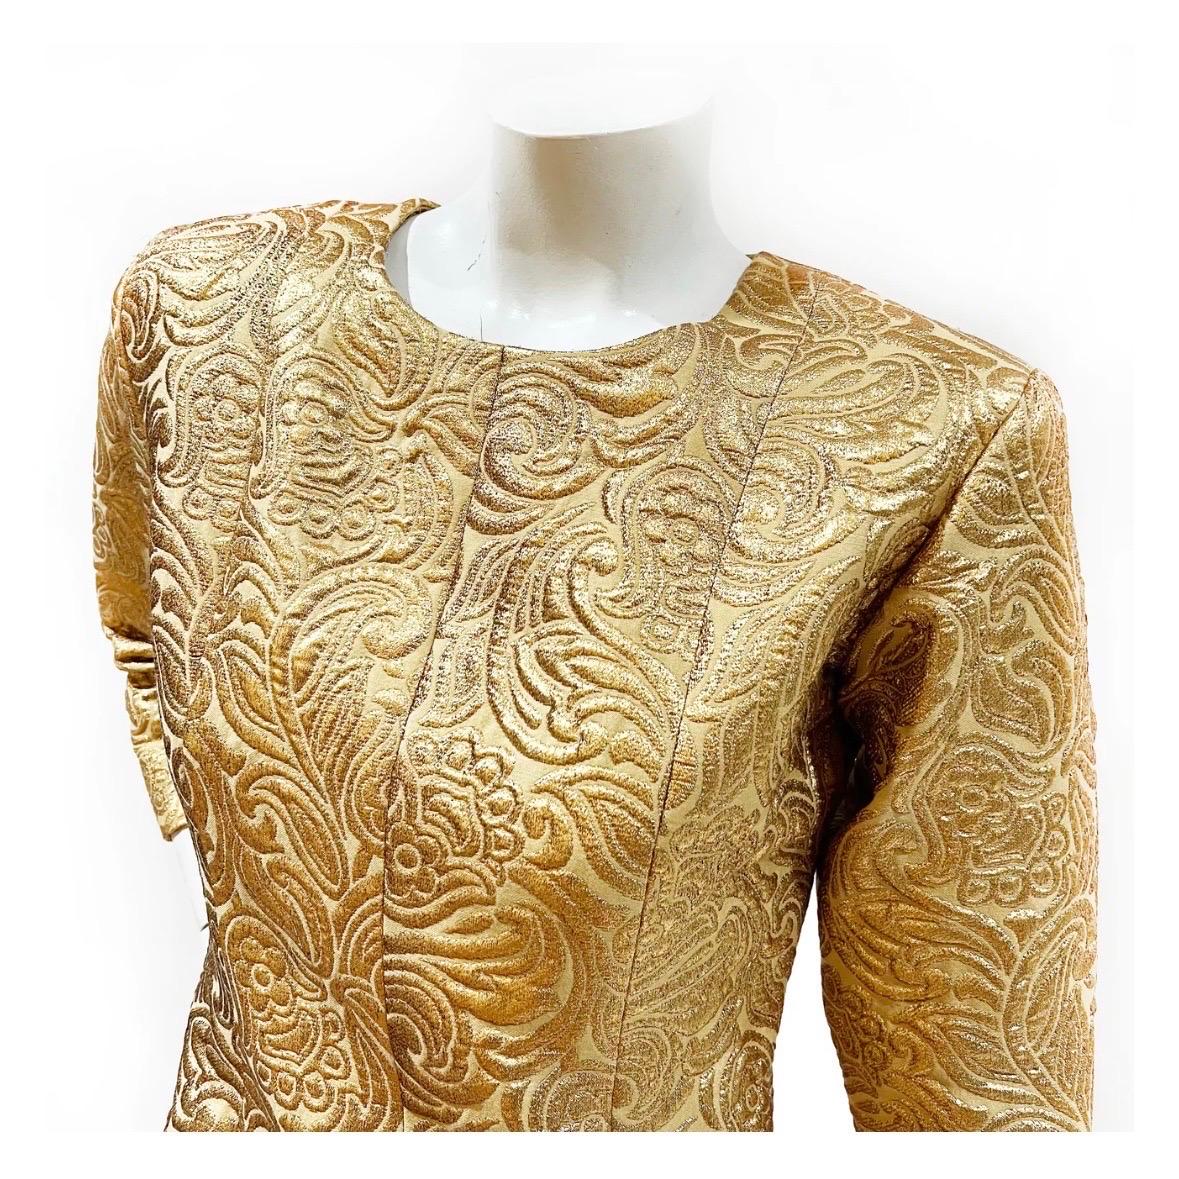 gold ysl dress